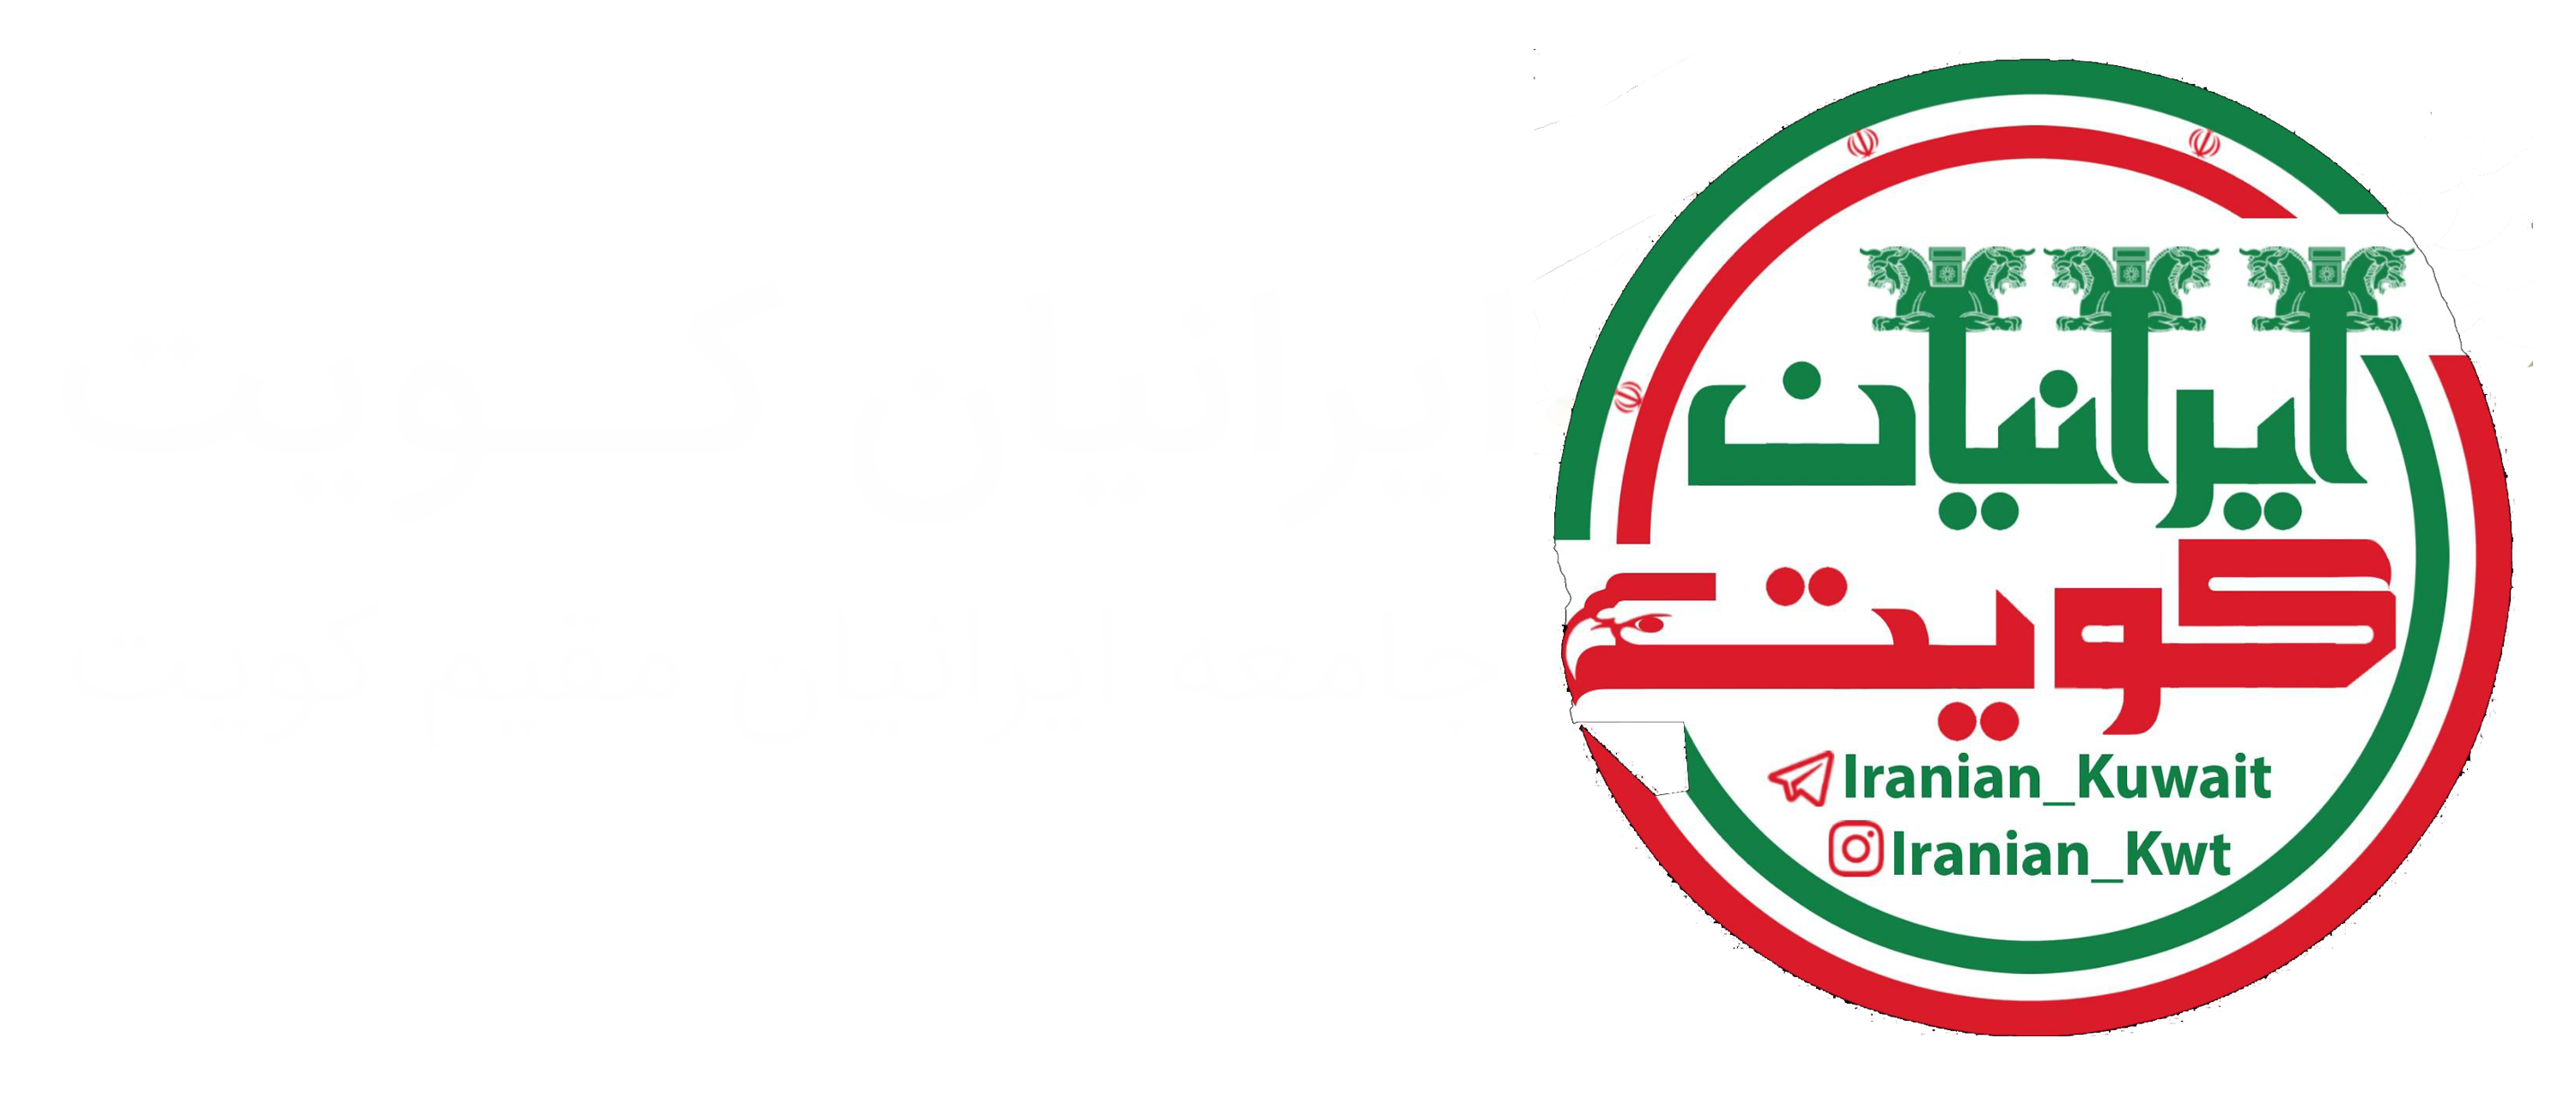 iranian kuwait logo dark logo